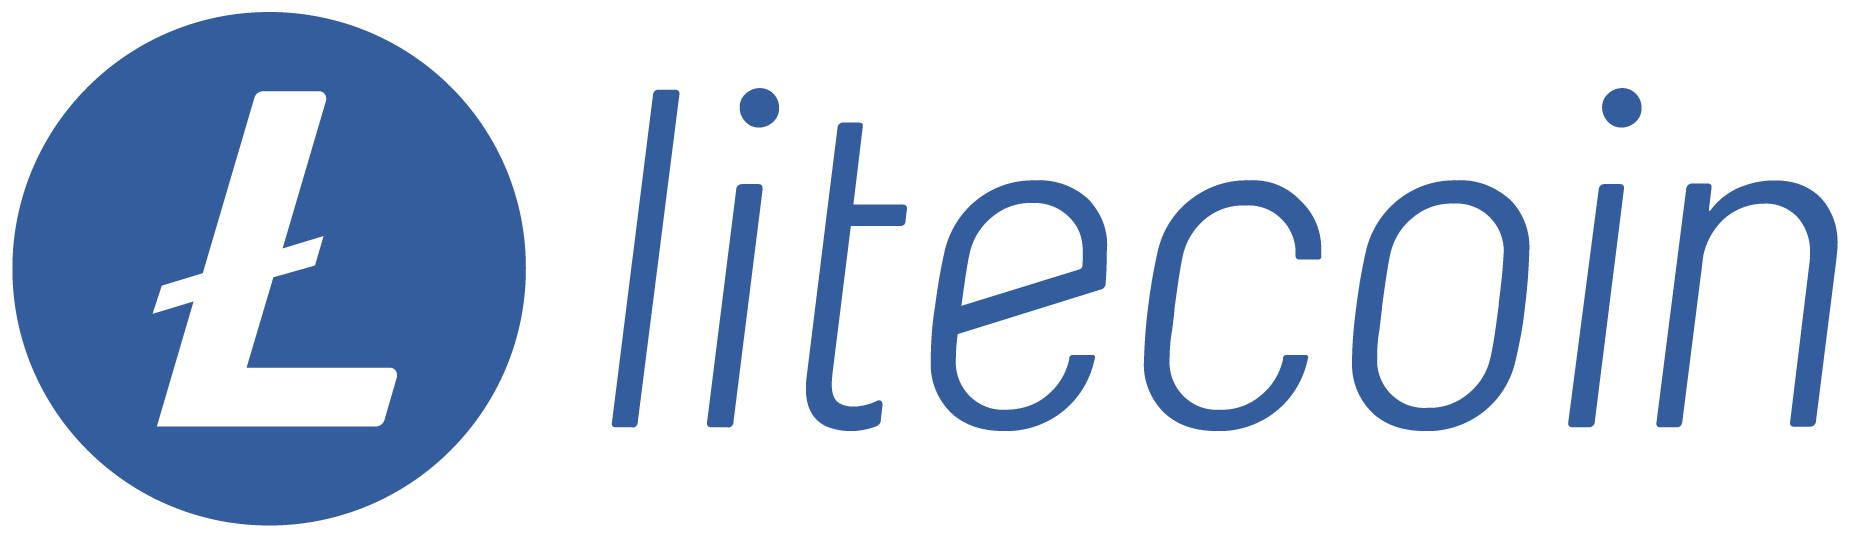 Litecoin logo colors